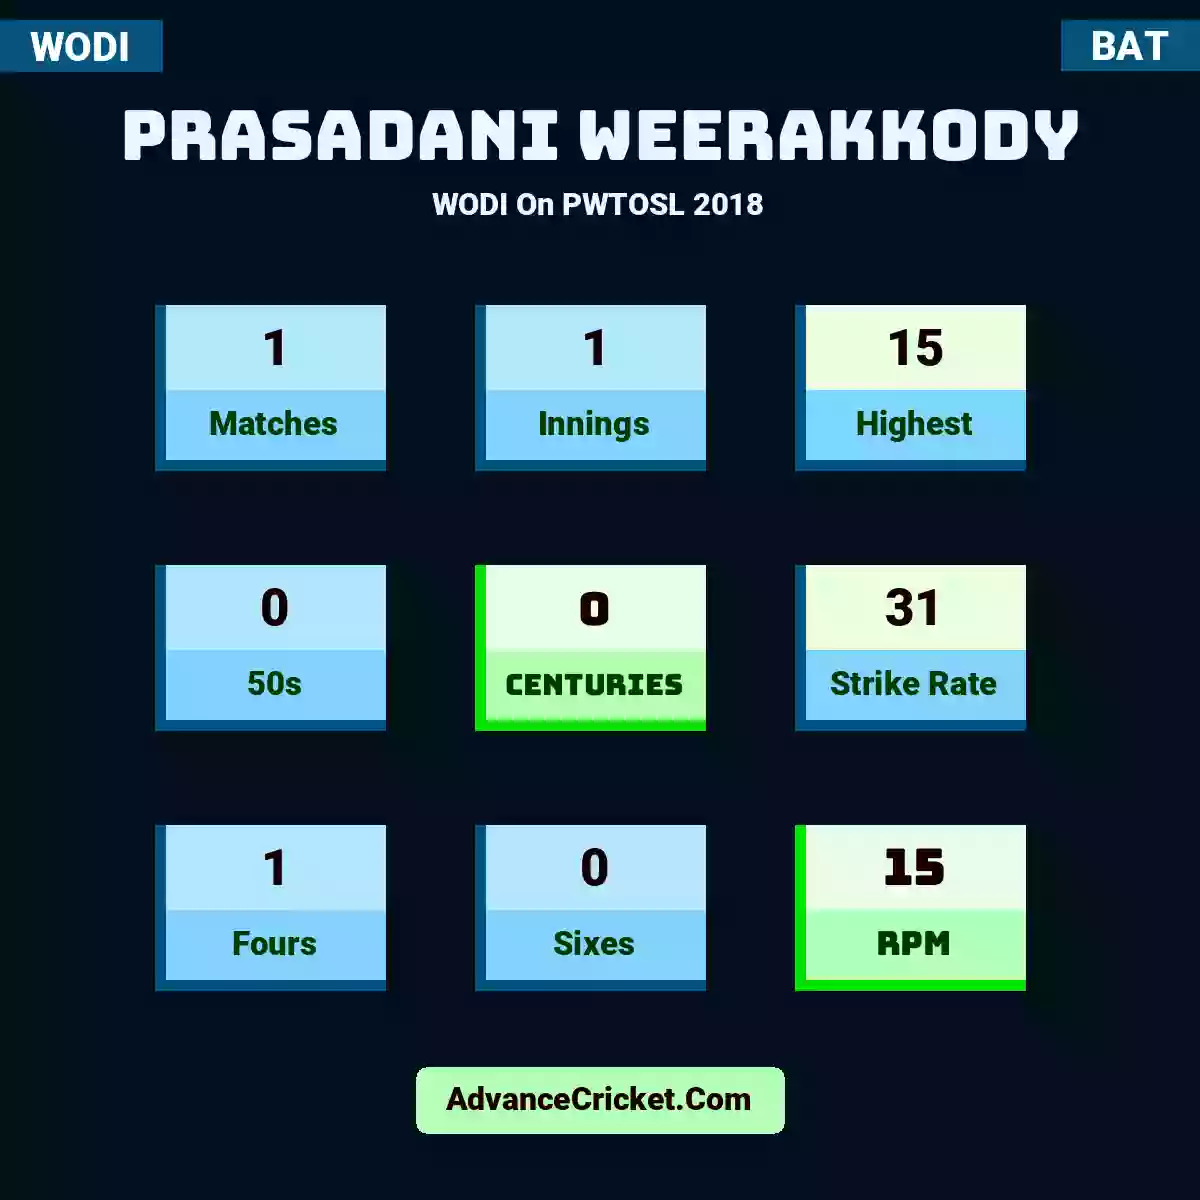 Prasadani Weerakkody WODI  On PWTOSL 2018, Prasadani Weerakkody played 1 matches, scored 15 runs as highest, 0 half-centuries, and 0 centuries, with a strike rate of 31. P.Weerakkody hit 1 fours and 0 sixes, with an RPM of 15.